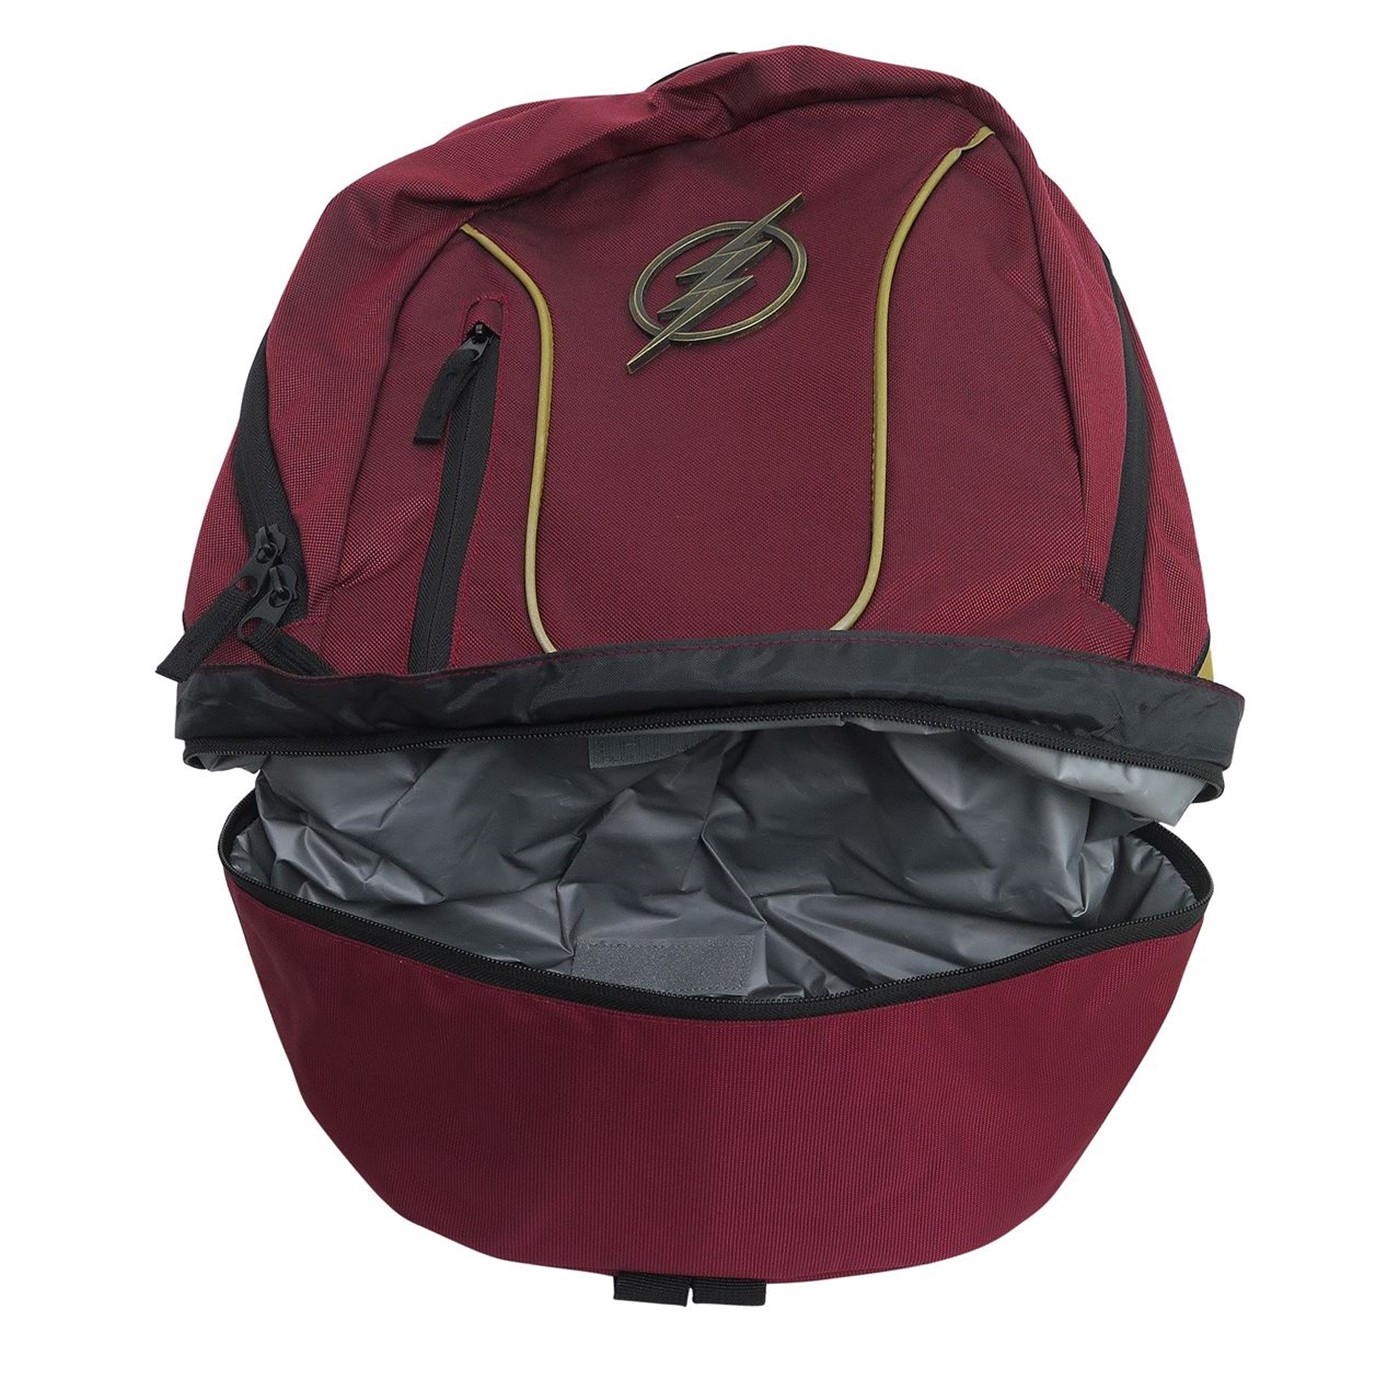 The Flash Better Built Backpack